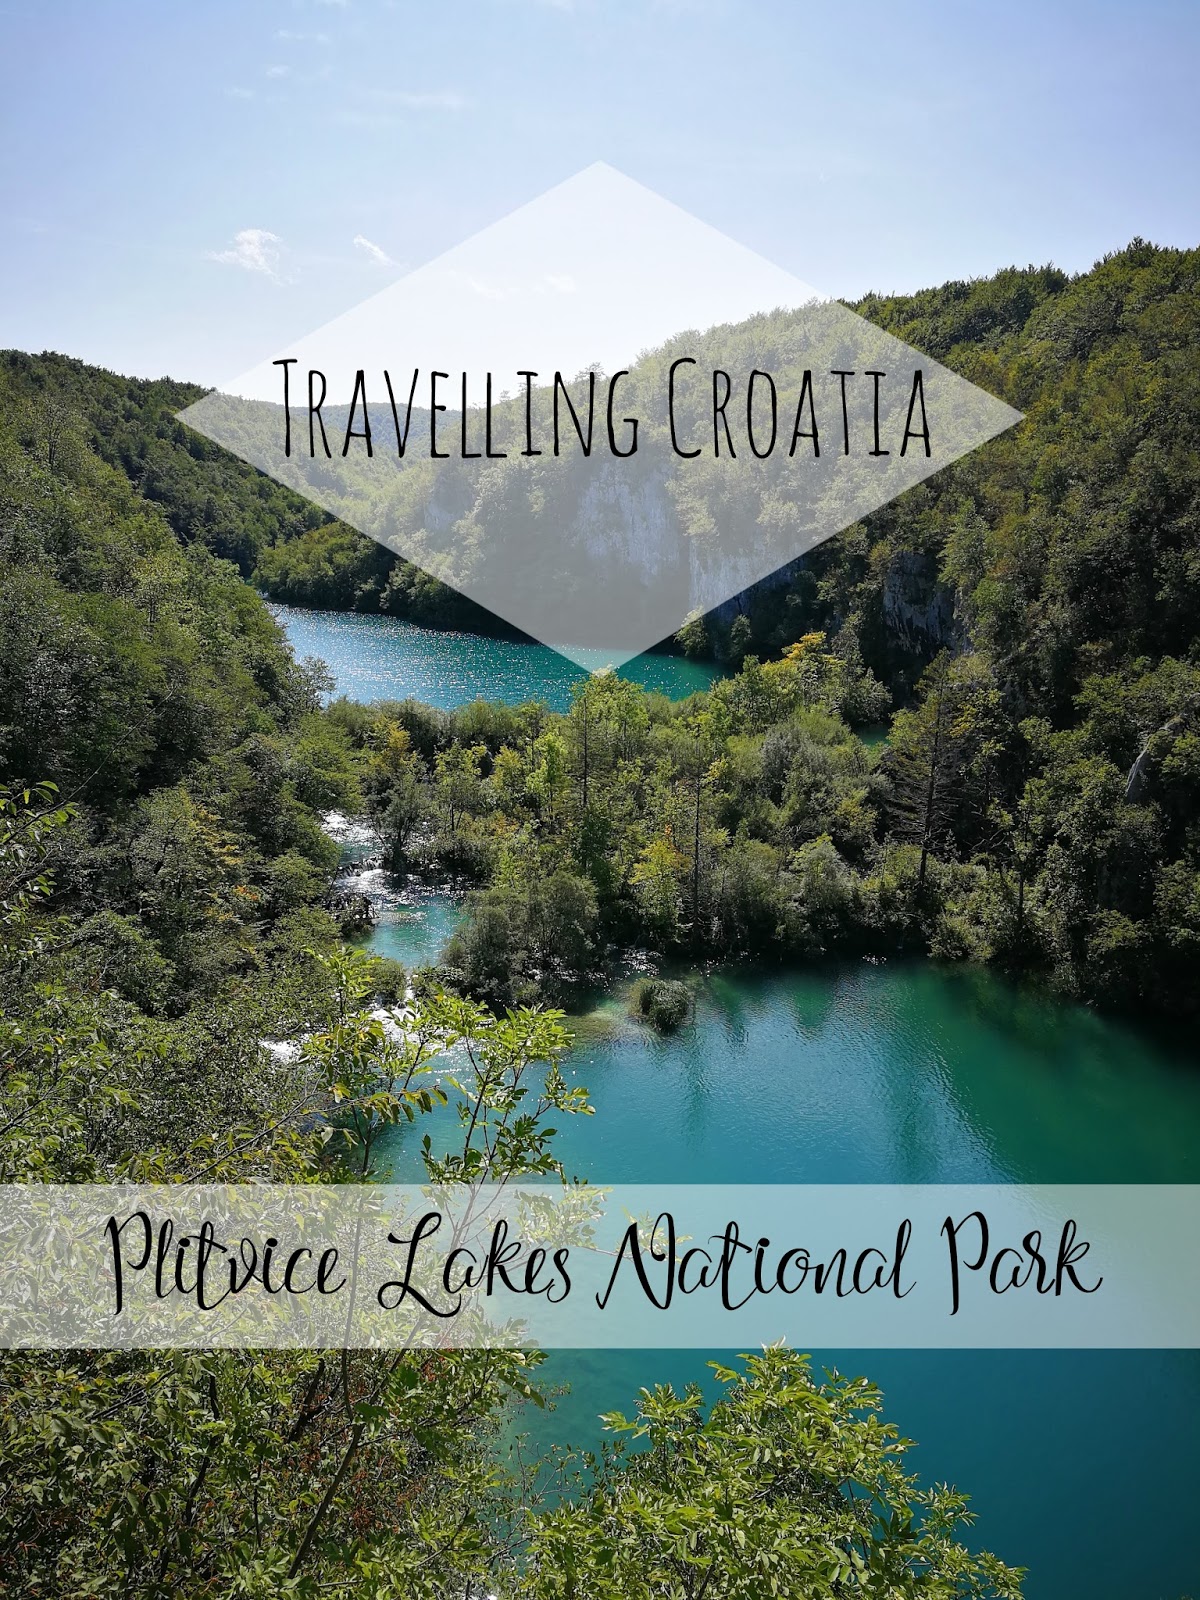 Travelling Croatia - Plitvice Lakes